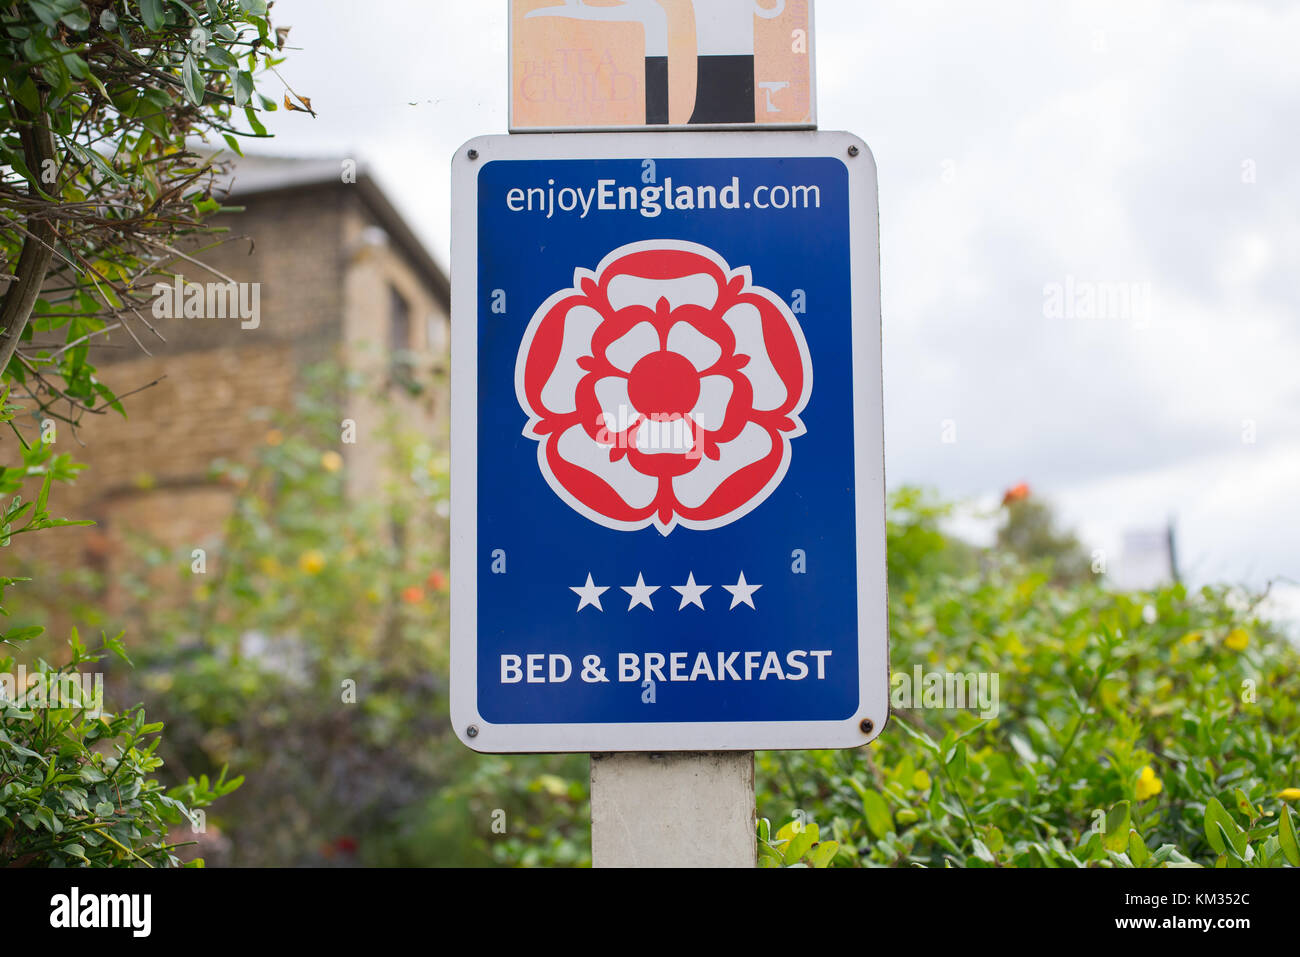 Bed and breakfast écriteau indiquant son appartenance à profiter d england.com, England's star Guest accommodation Banque D'Images